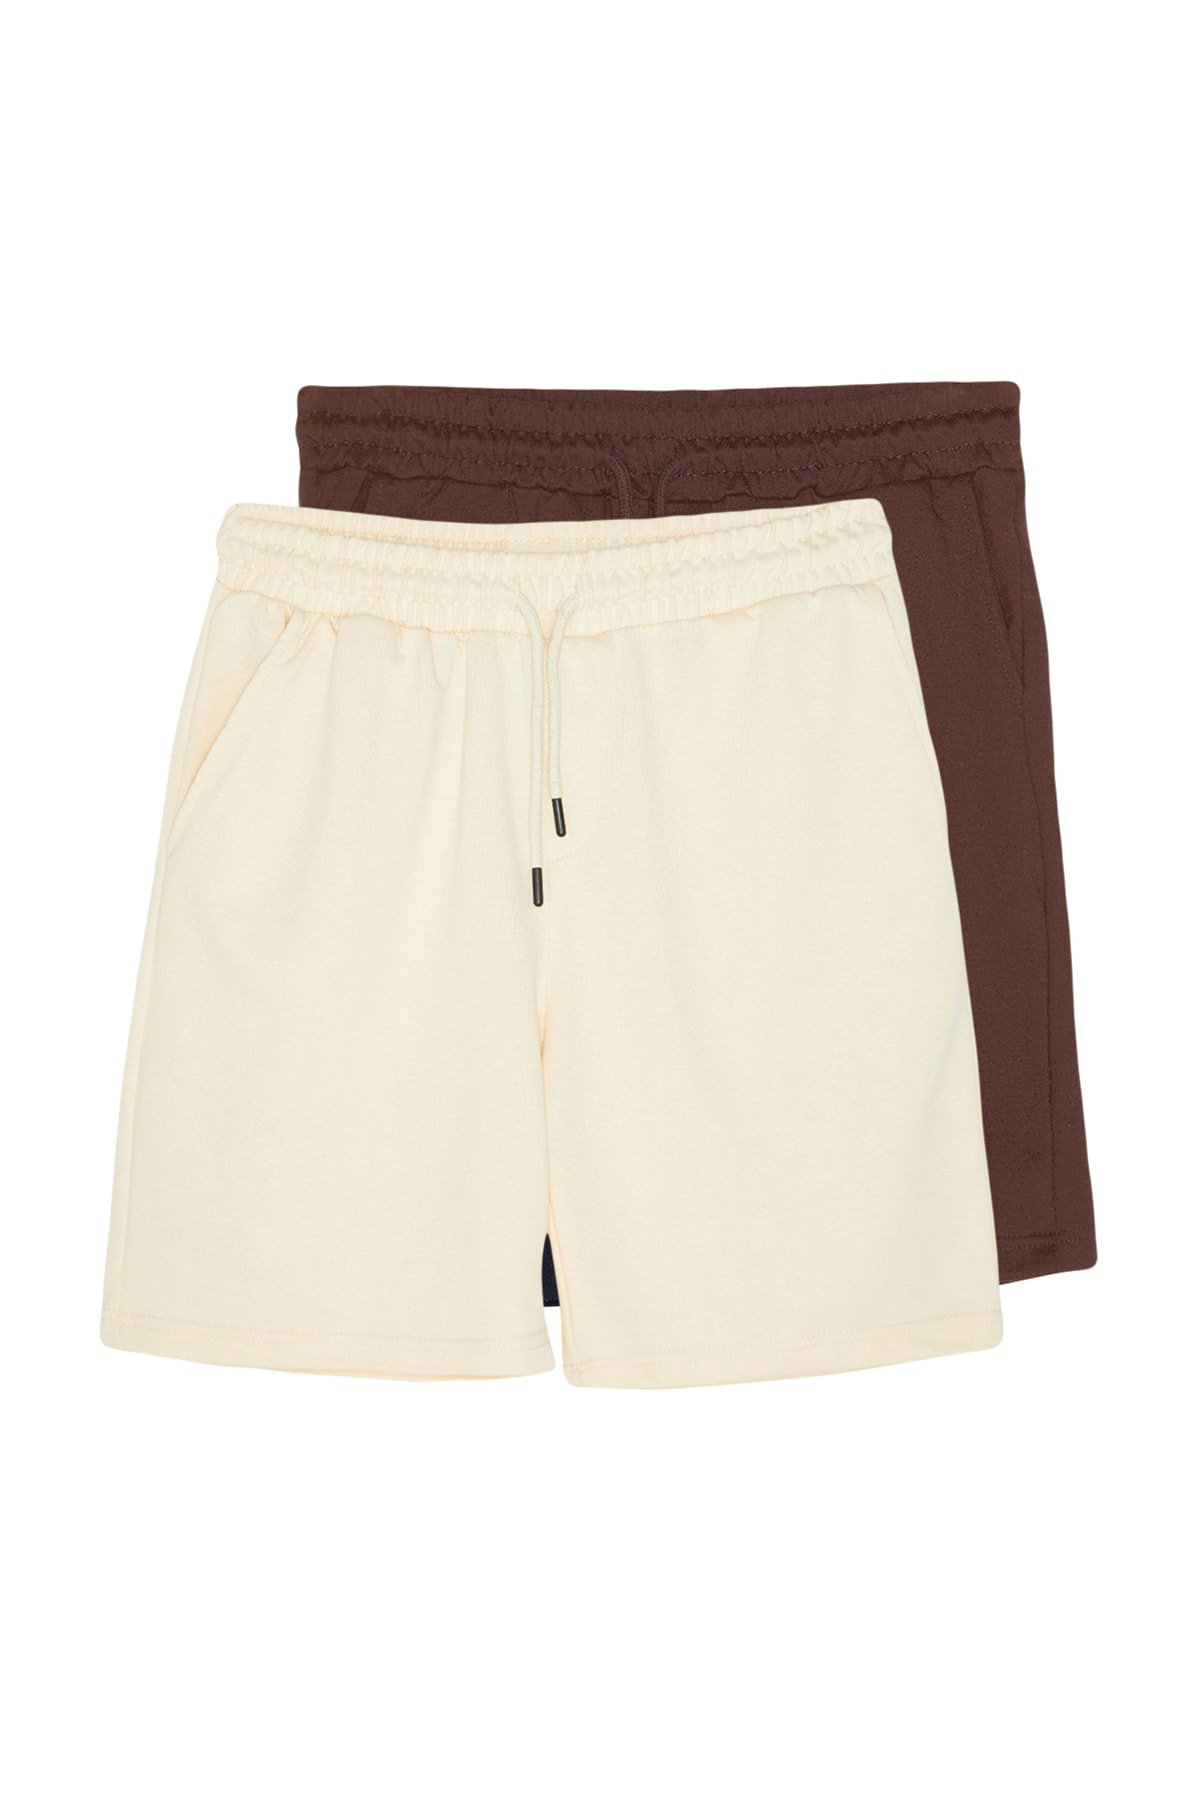 Trendyol Brown-Stone Men's Basic Regular/Normal Cut Straight 2-Pack Shorts.